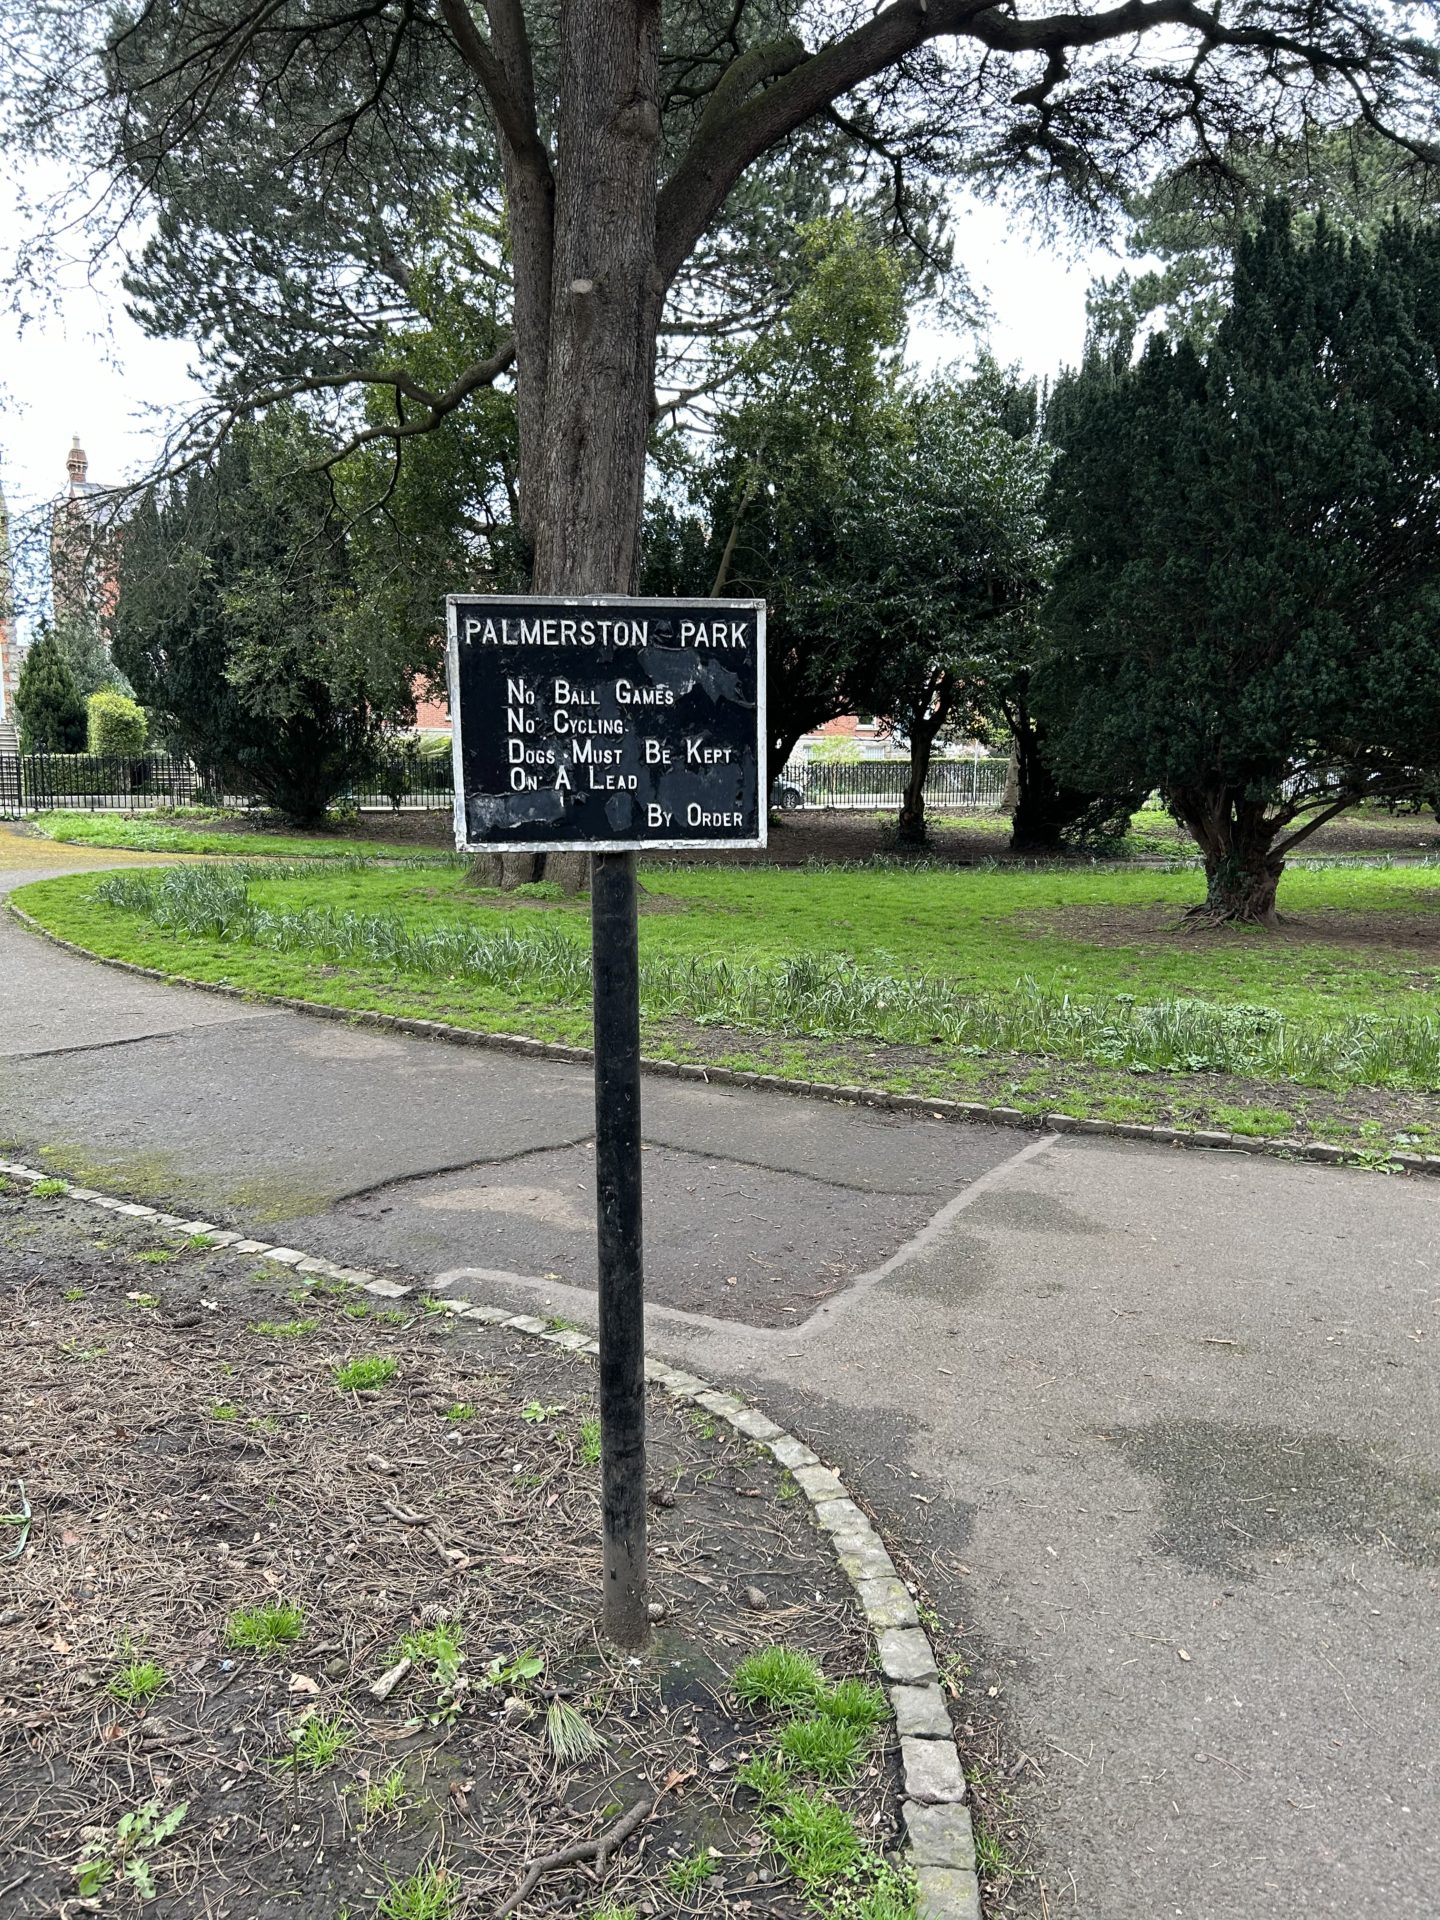 Dublin’s Palmerston Park.